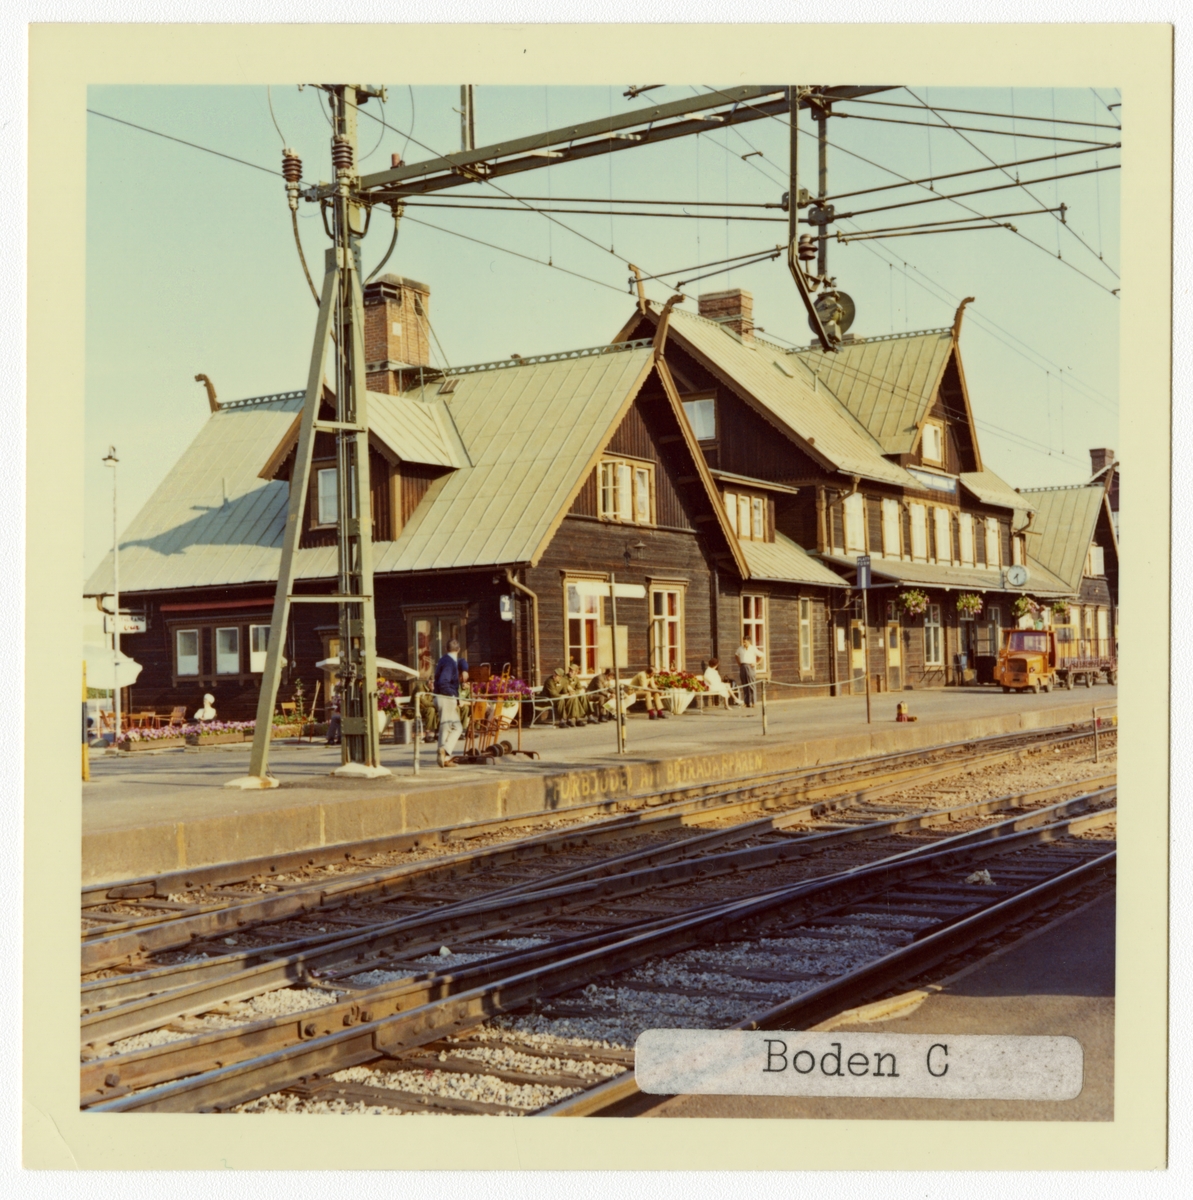 Stationen kallad BODEN CENTRAL 1926-05-15 - 1981-05-31.
S&NJ, Sverige & Norge Järnväg